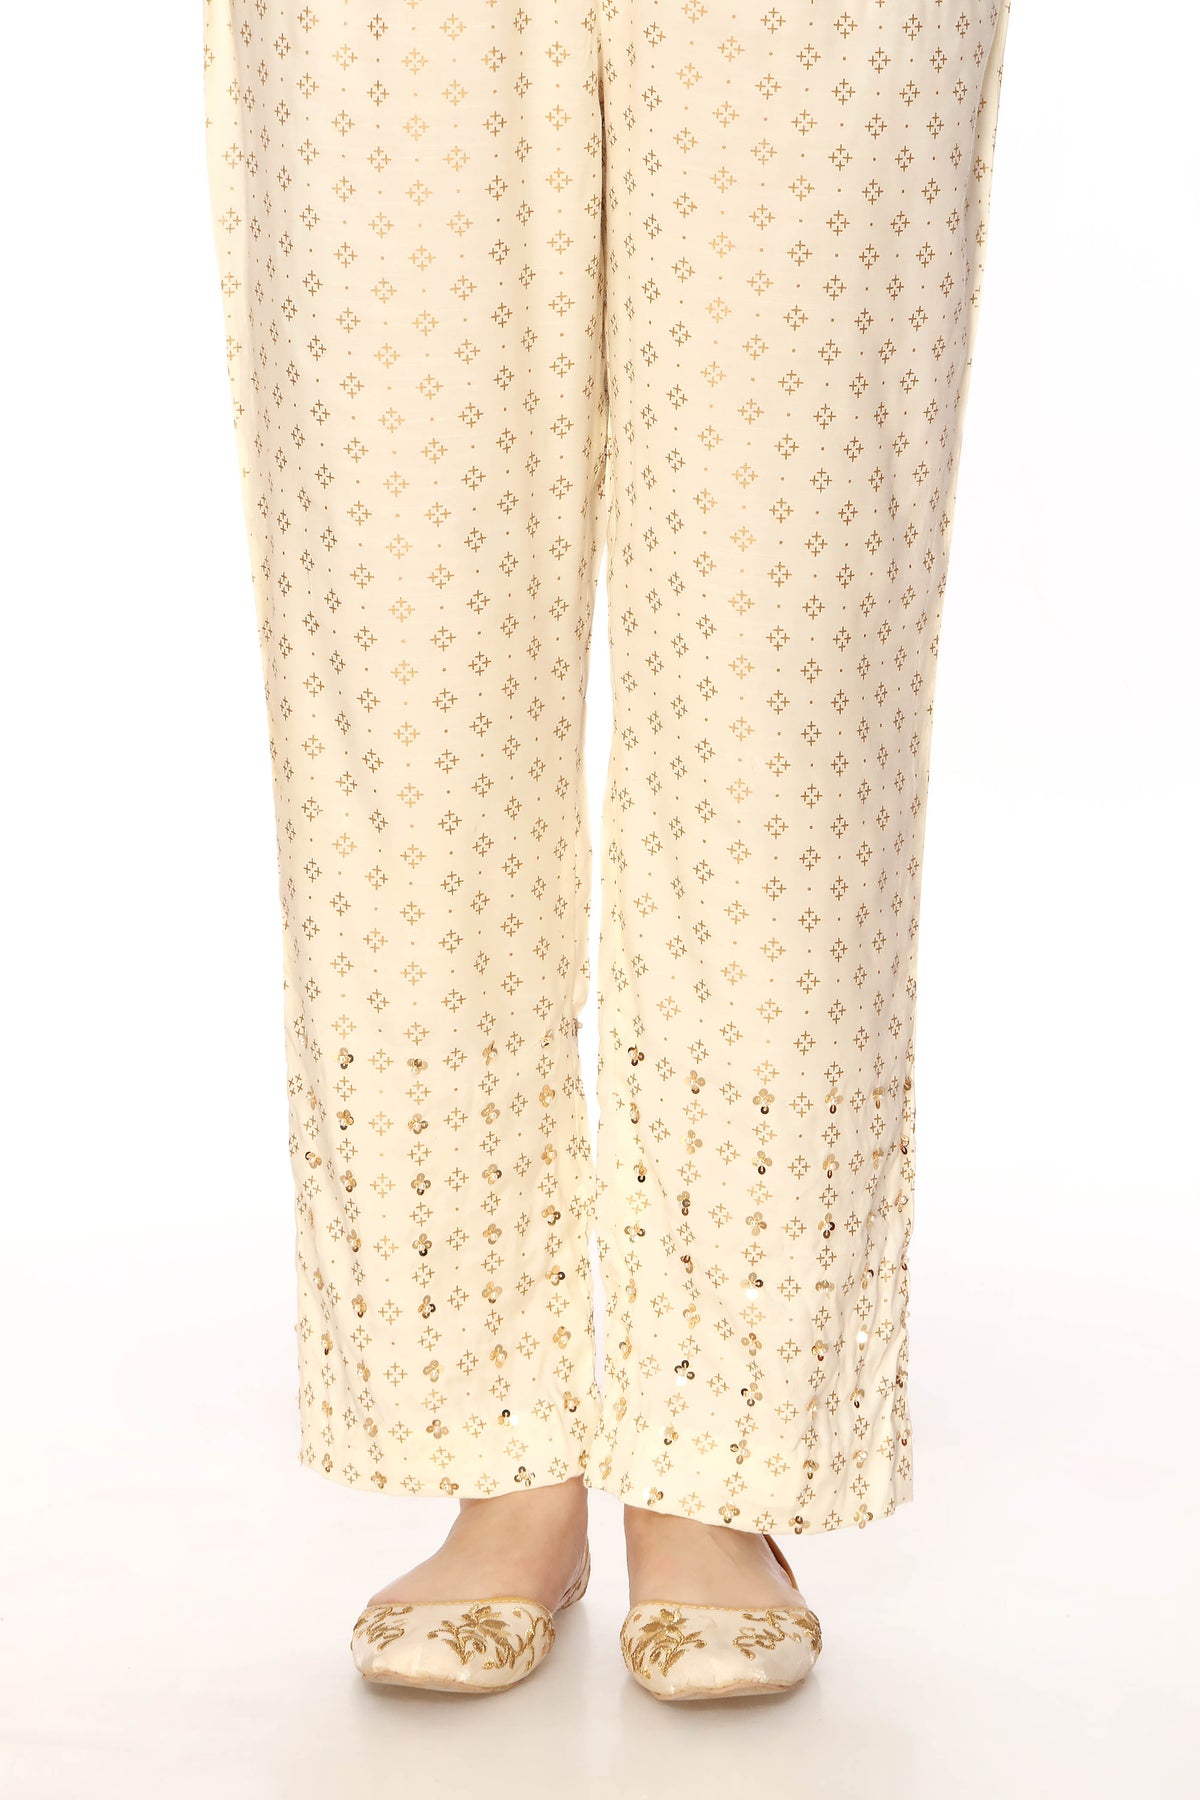 Square Trouser in Off White coloured Pak Raw Silk fabric